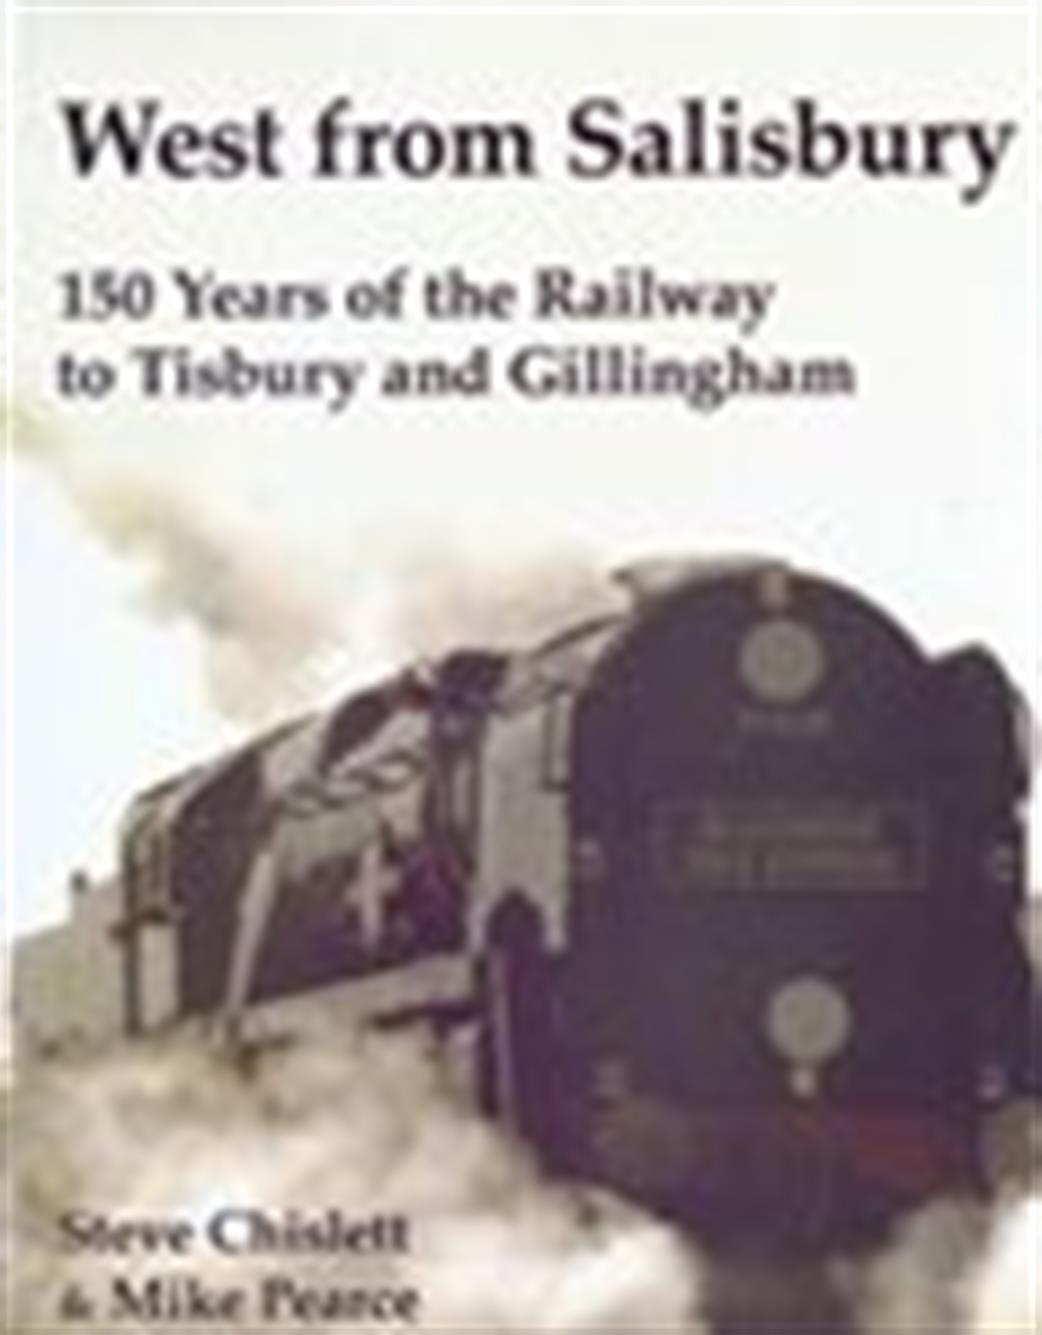 9780948975875 West from Salisbury by Steve Chislett & Mike Pearce